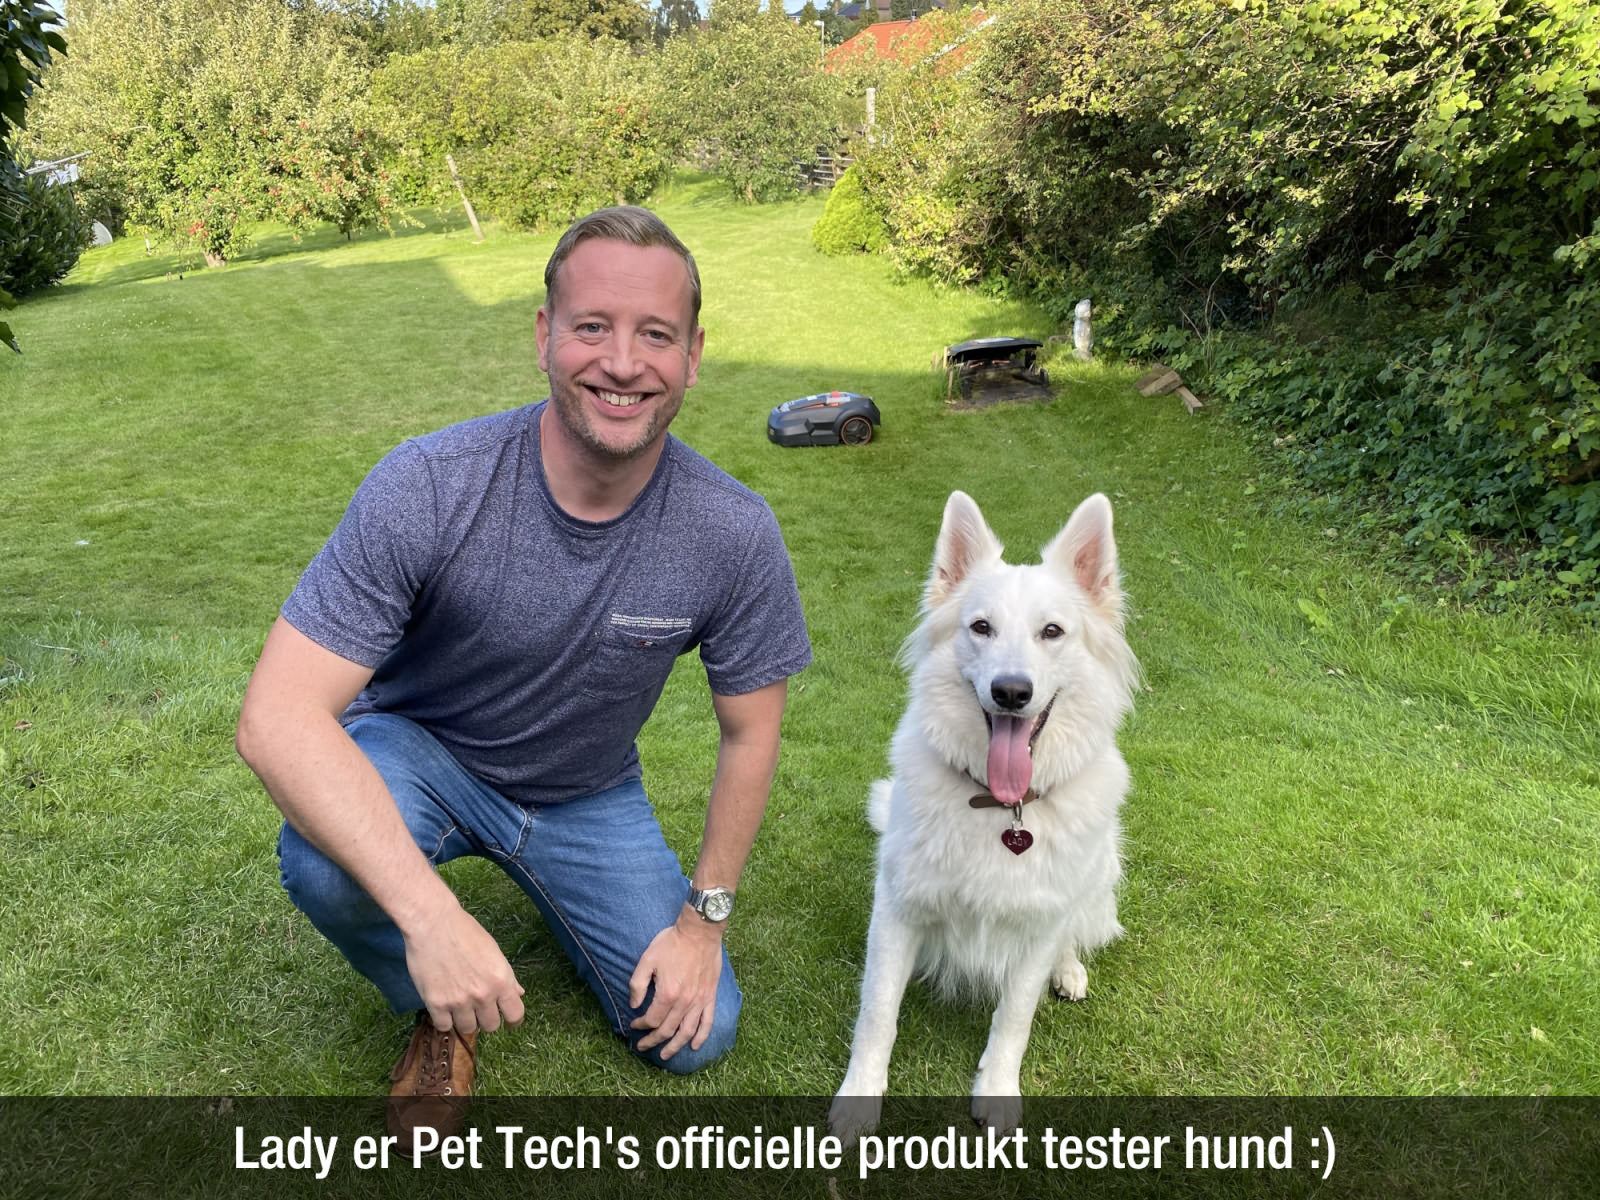 Lady er Pet Tech's officielle produkt tester hund